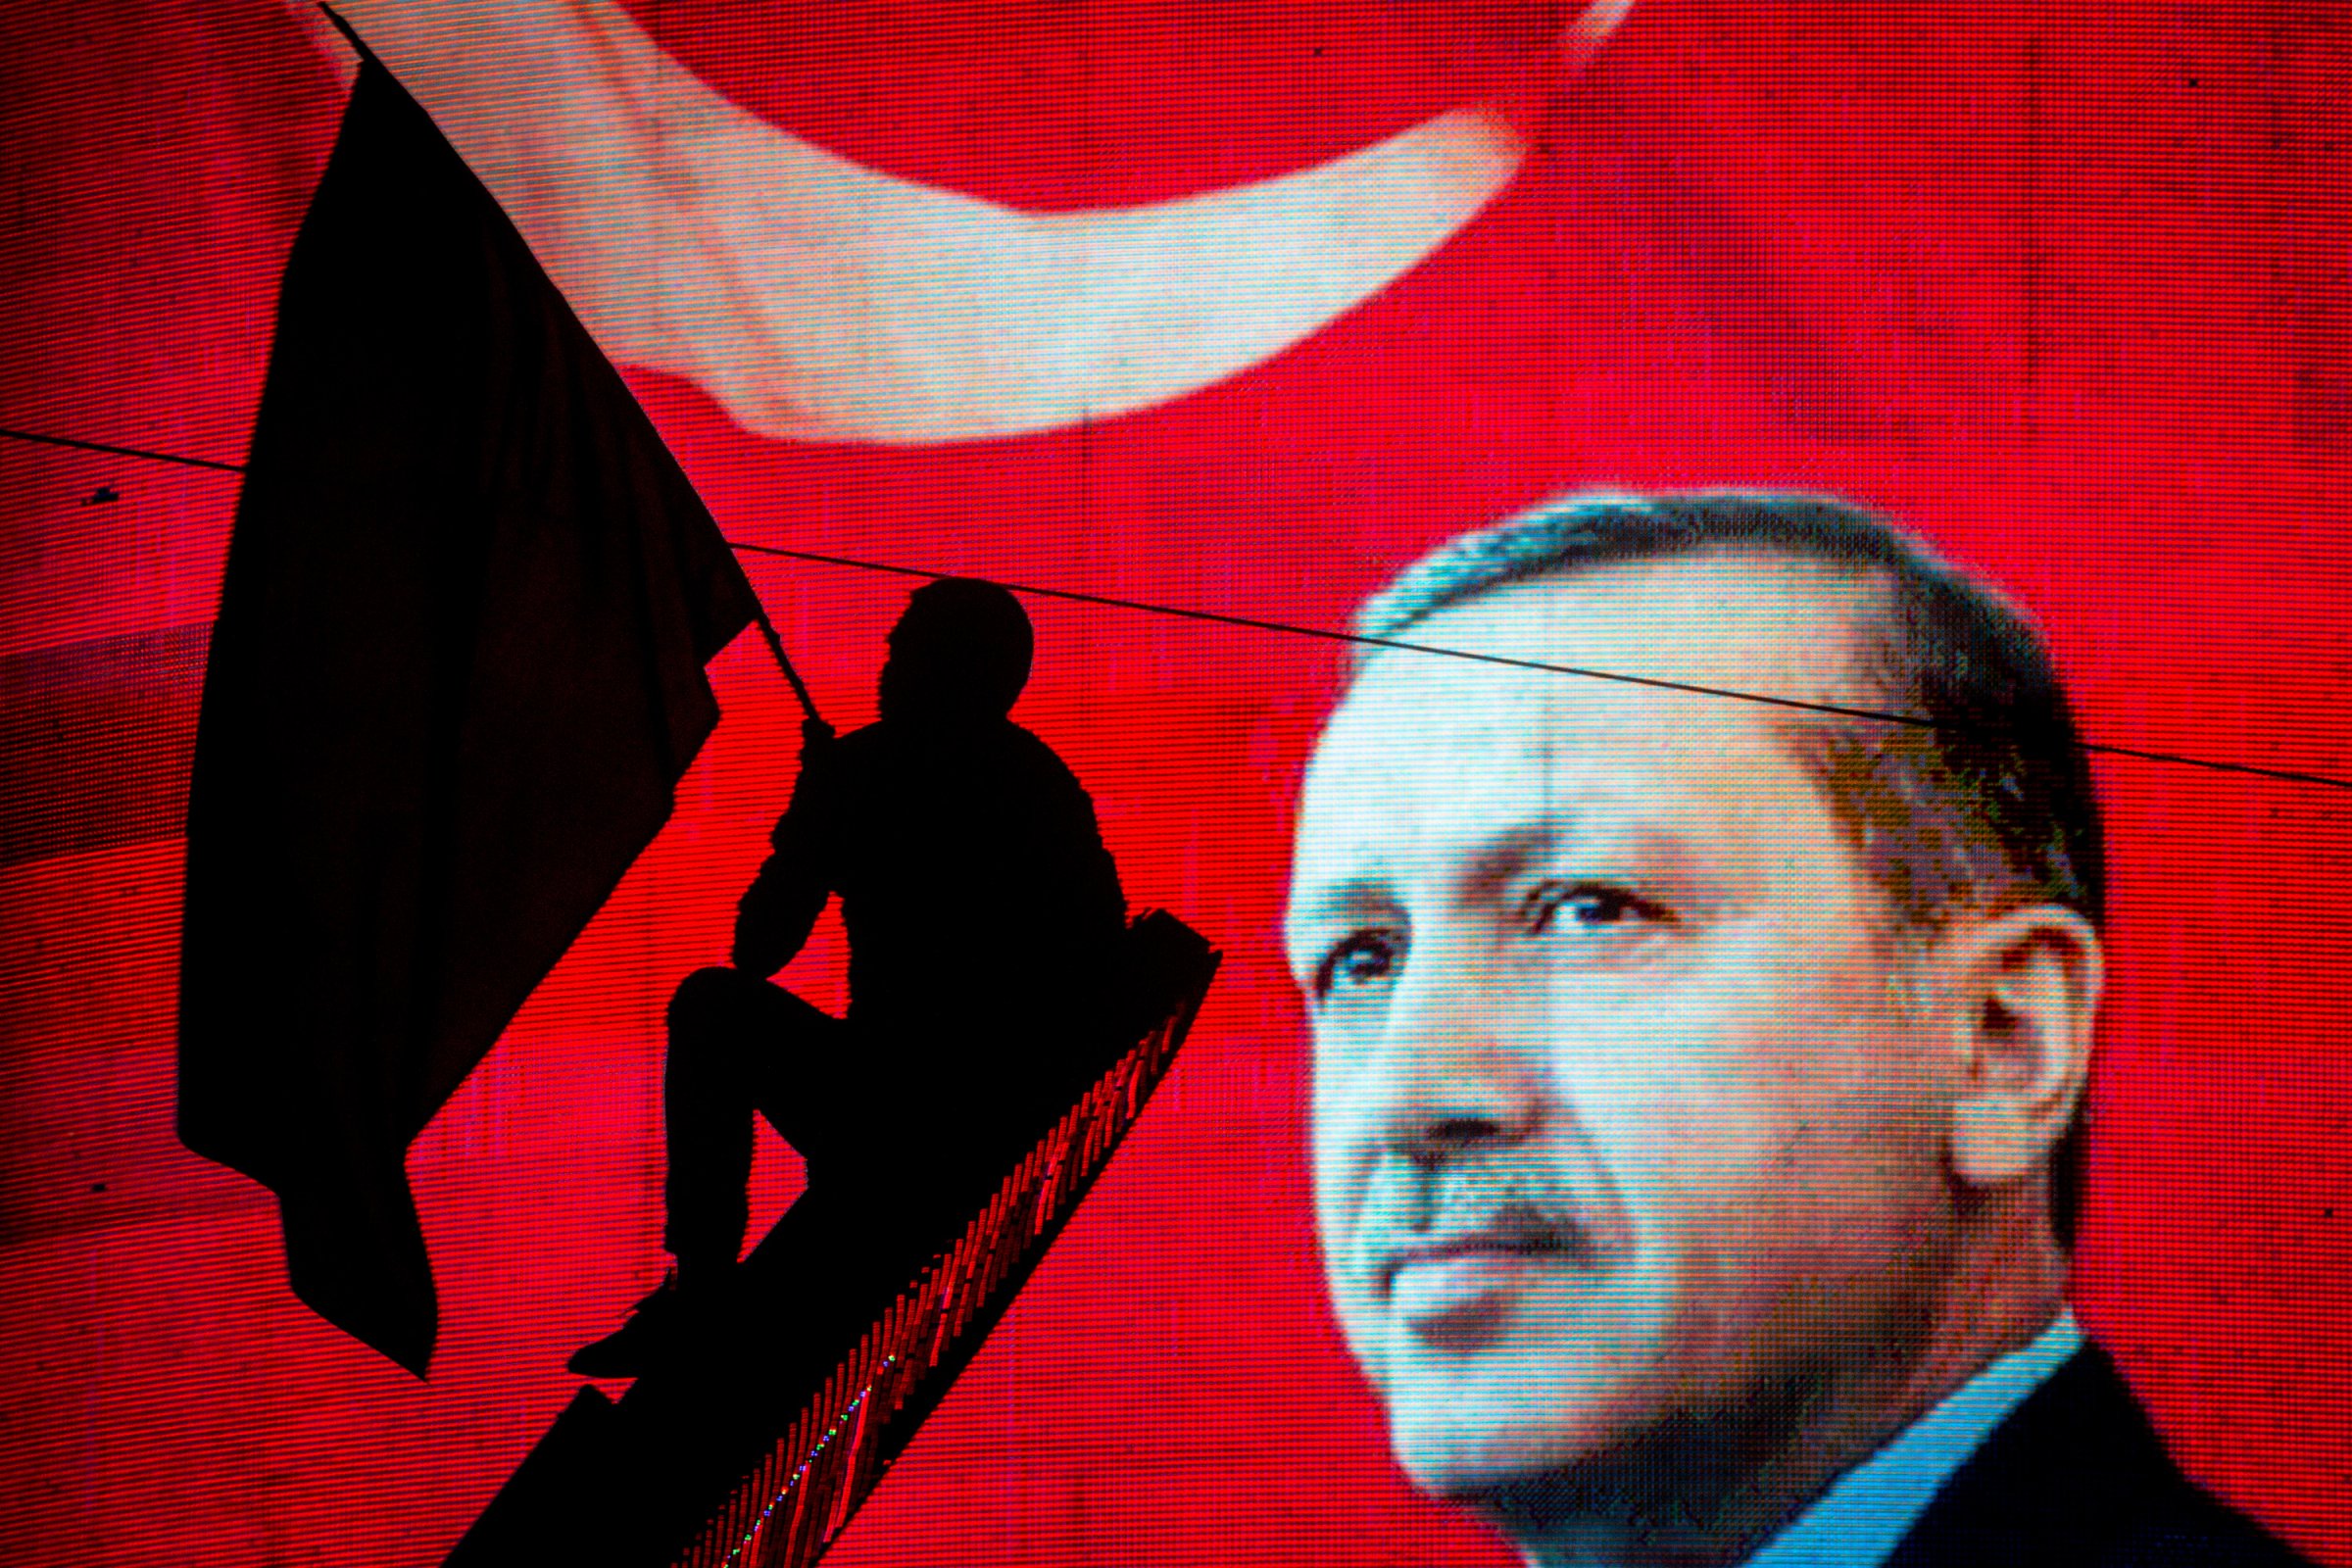 Turkey Coup